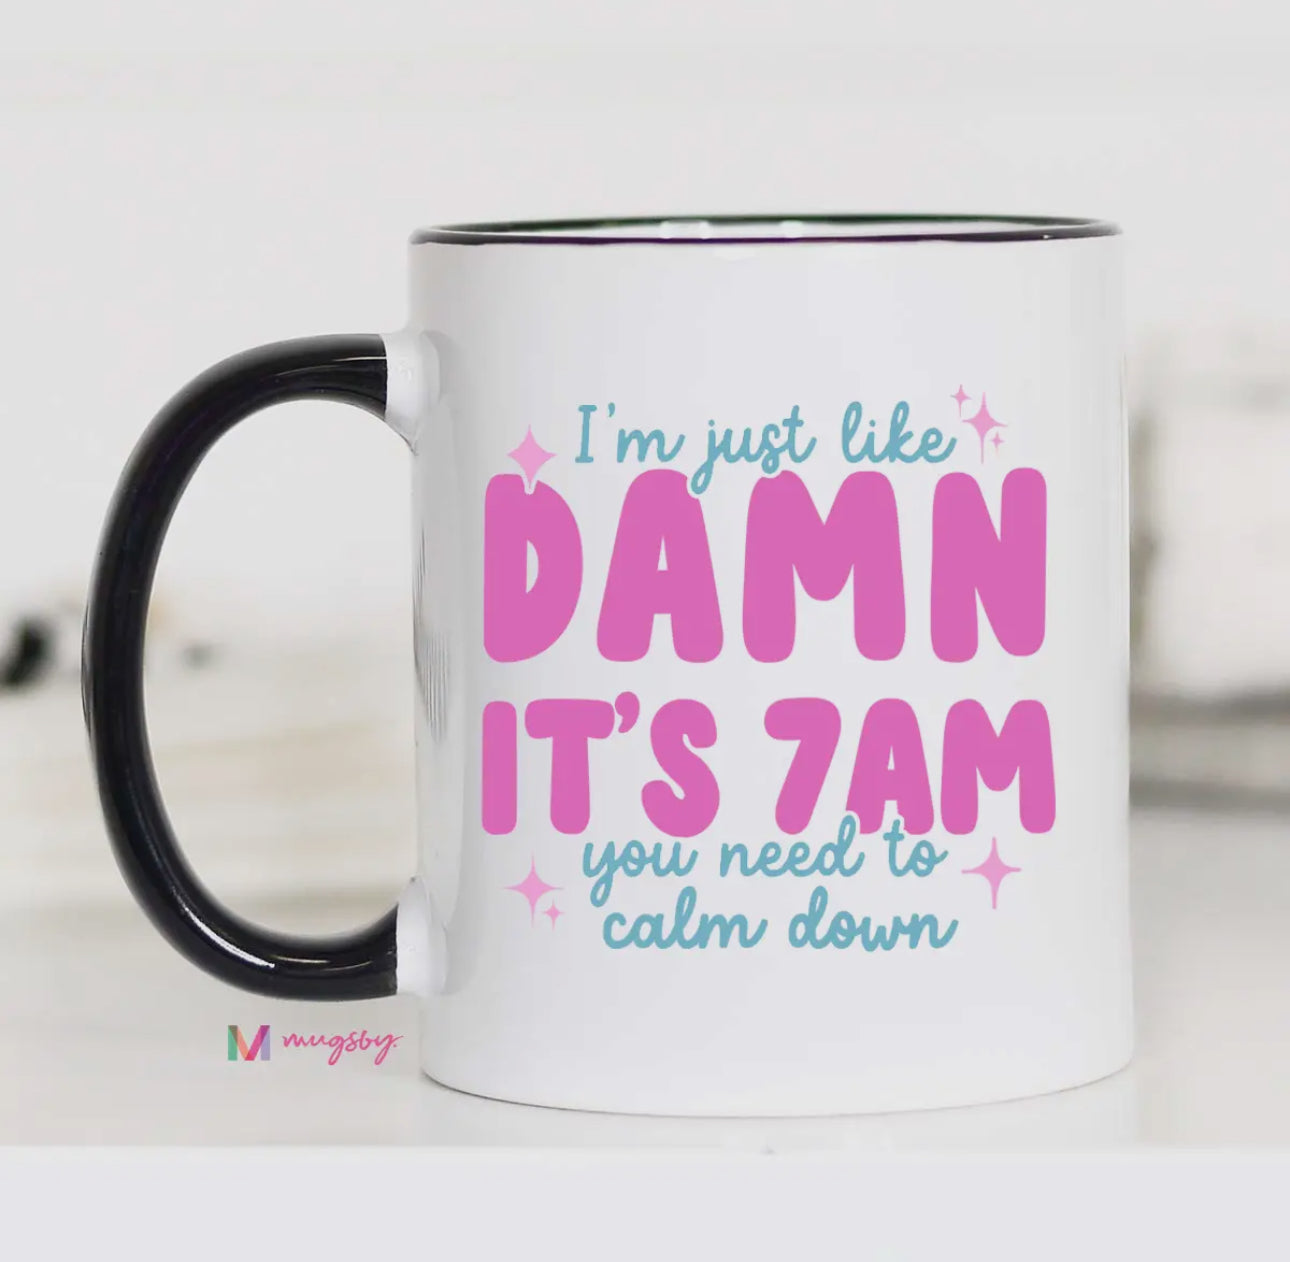 Damn it’s 7am you need to calm down Coffee Mug 11oz